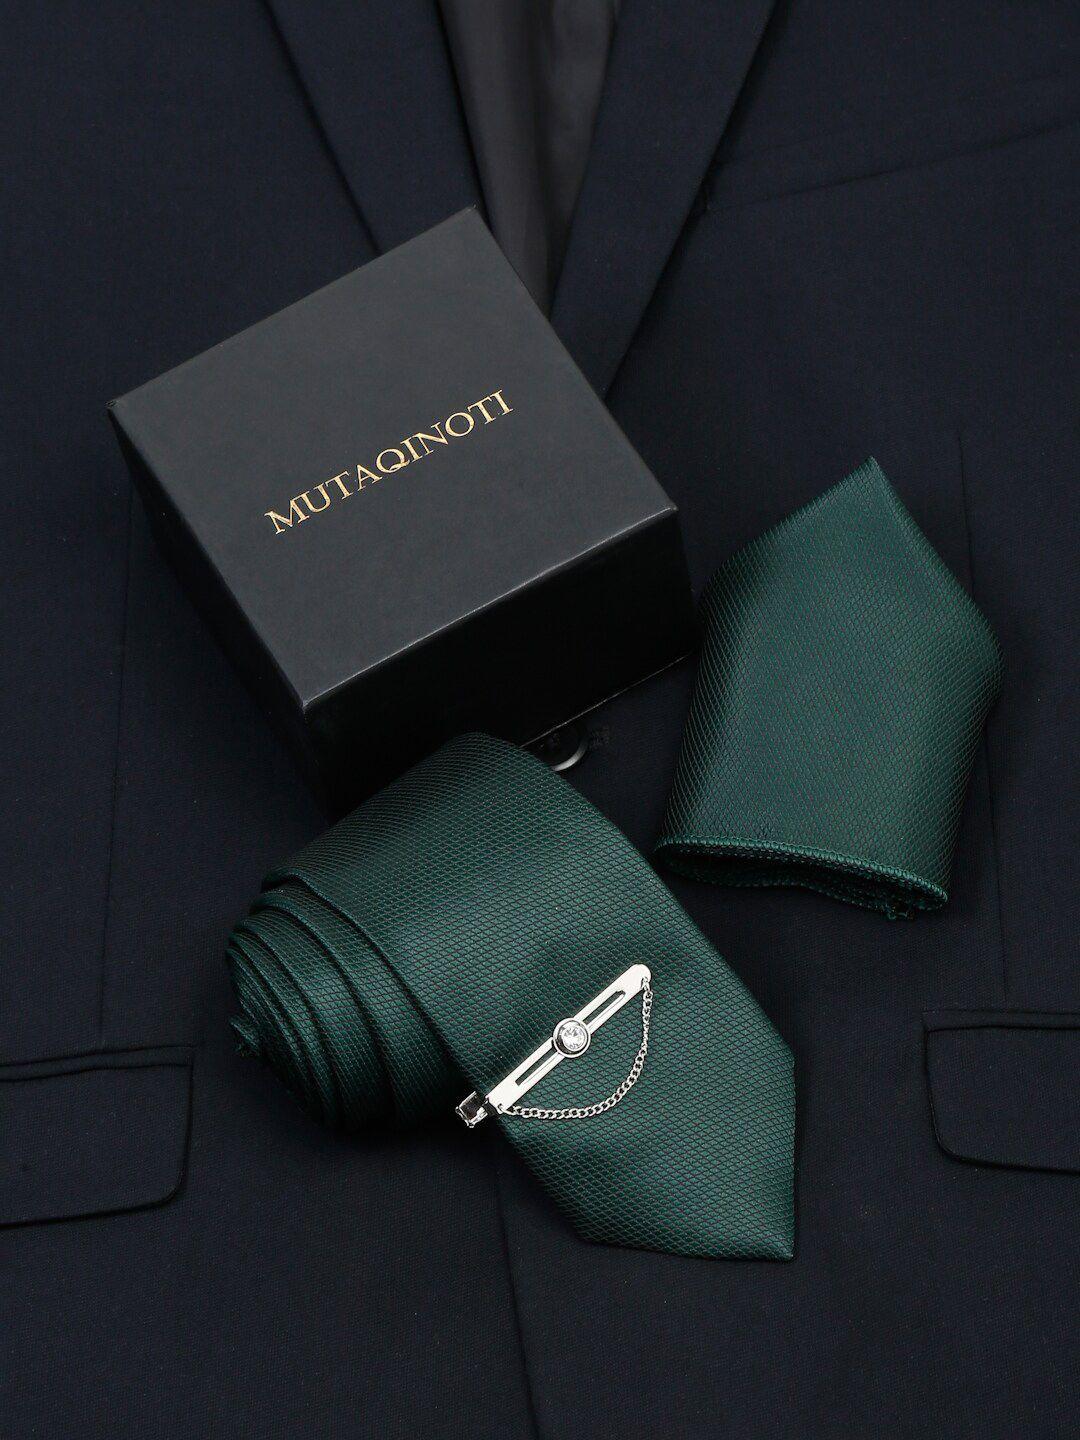 mutaqinoti men silk tie cufflinks pocket square accessory gift set